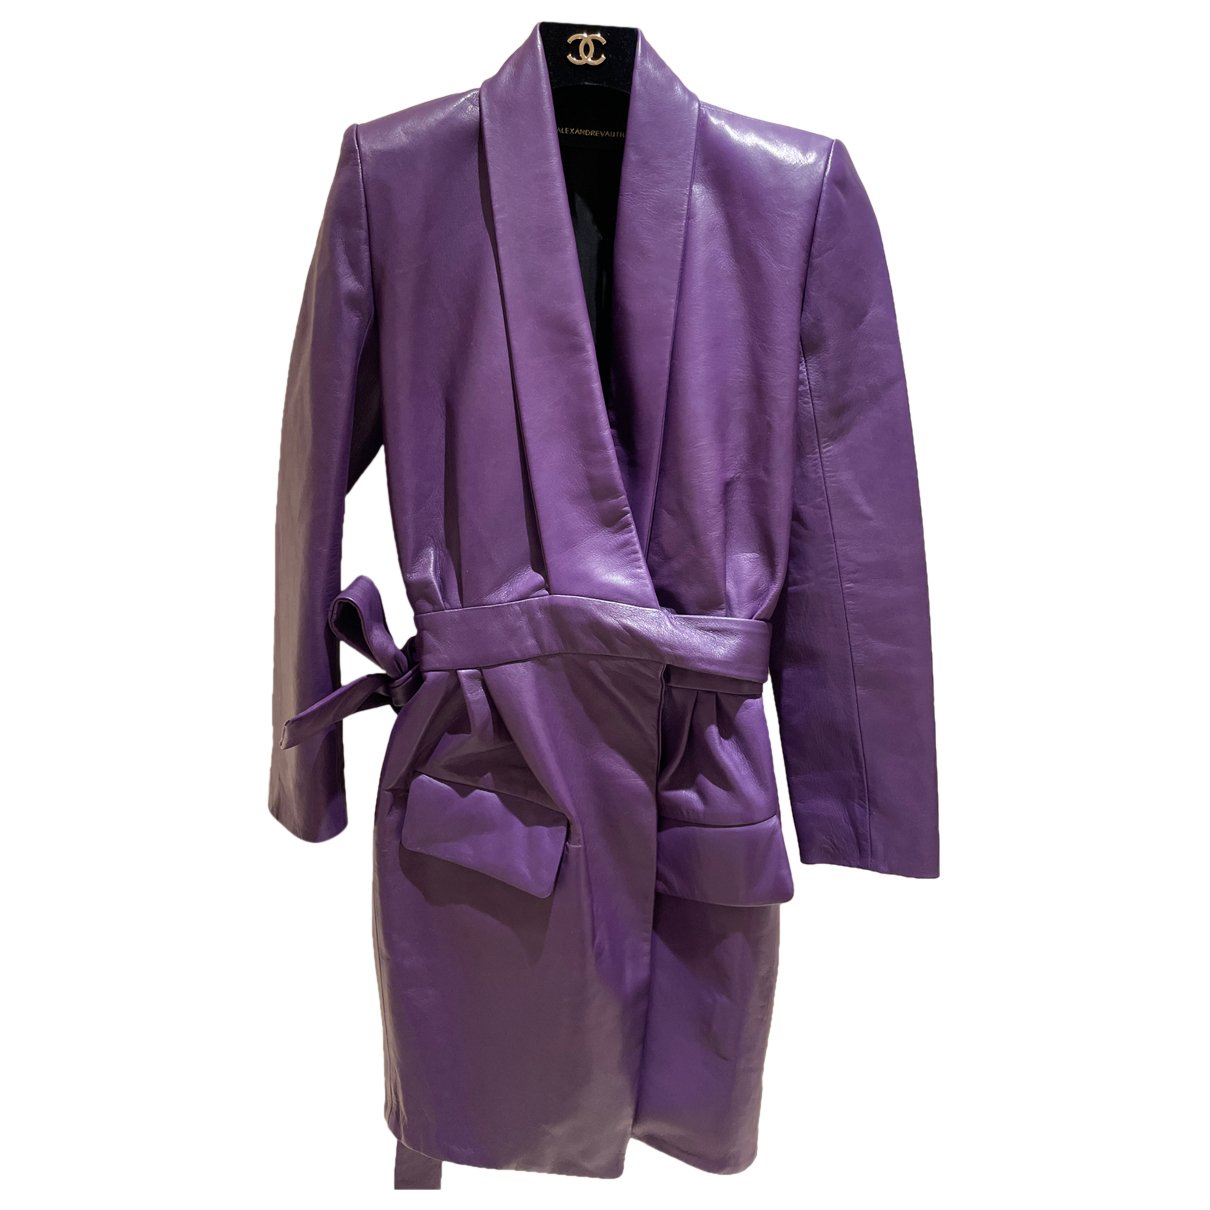 Alexandre Vauthier Belted Leather Mini Dress in Purple.jpg